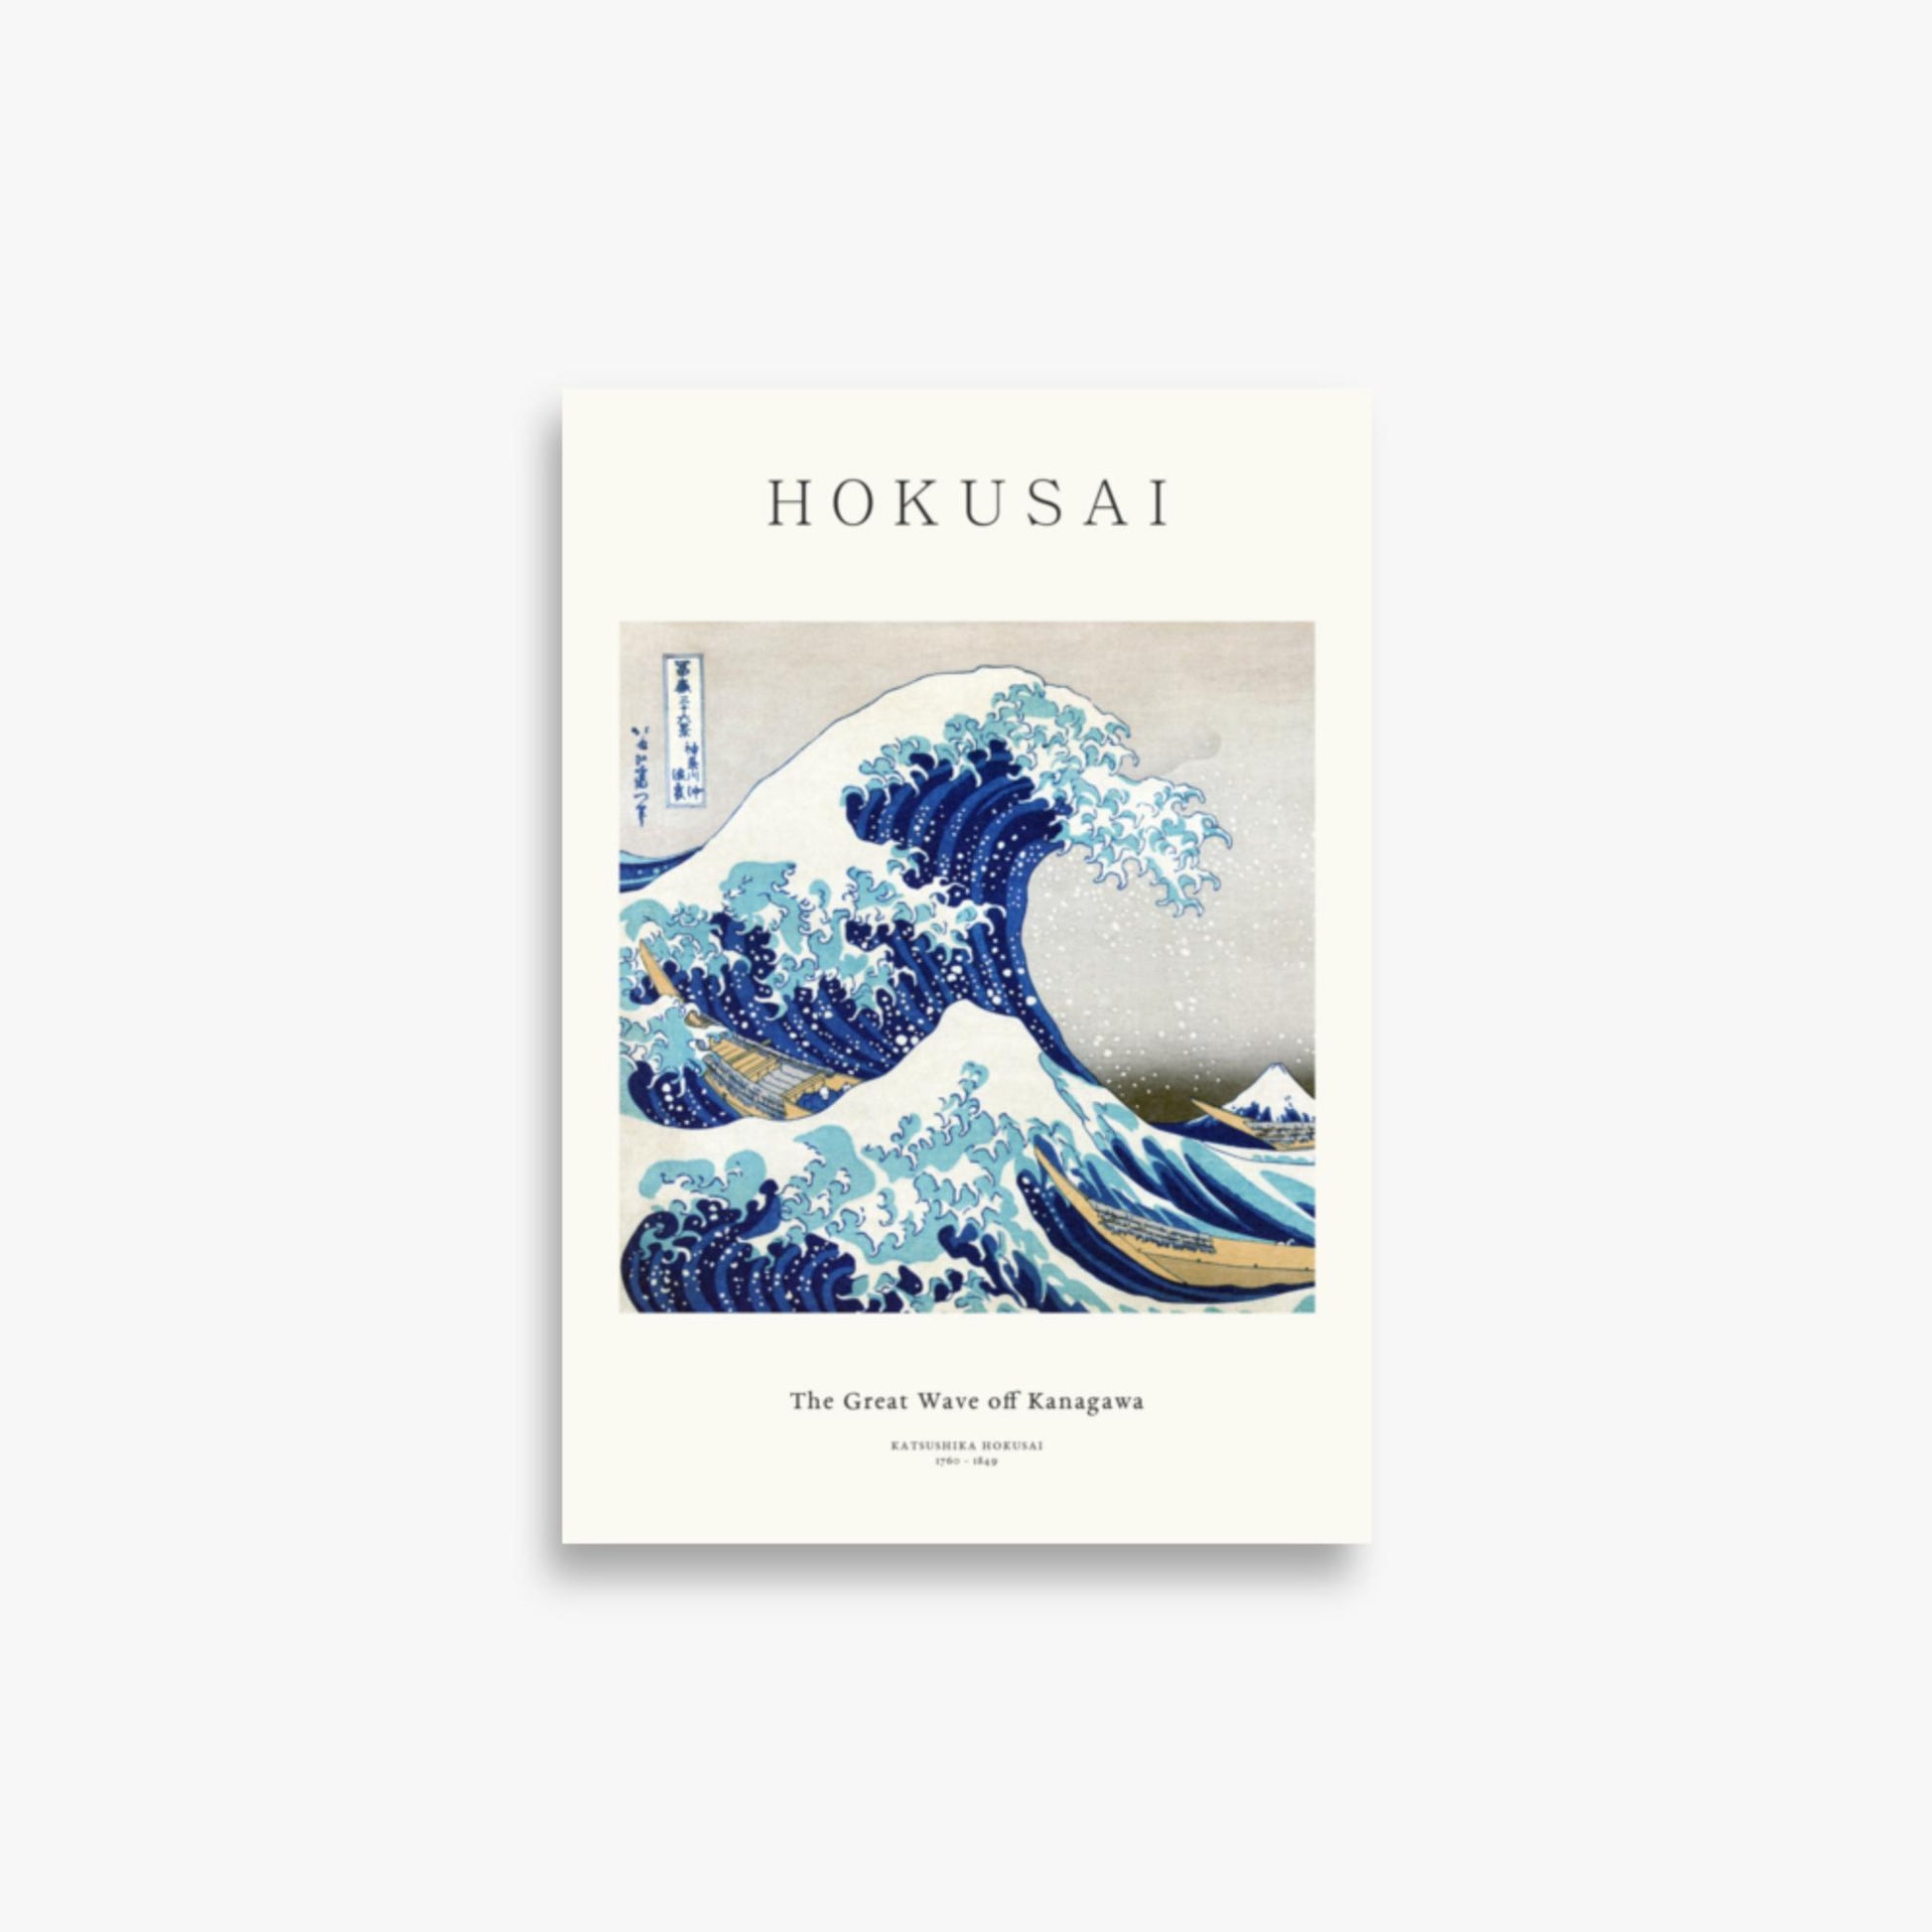 Katsushika Hokusai - The Great Wave off Kanagawa - Decoration 21x30 cm Poster